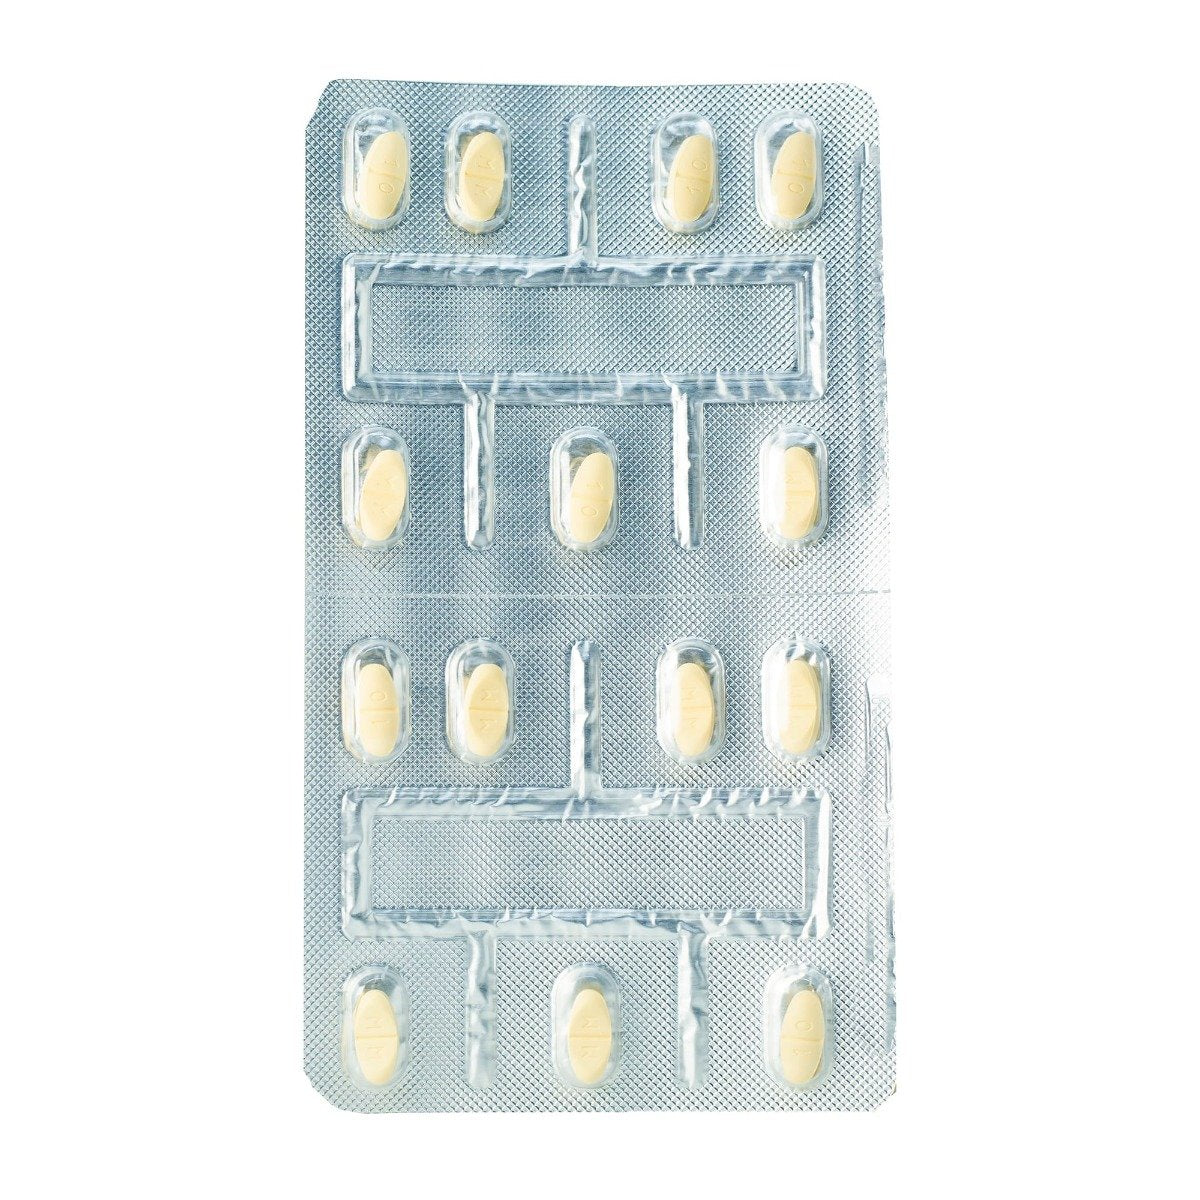 Ebixa 10 mg - 28 Tablets - Bloom Pharmacy